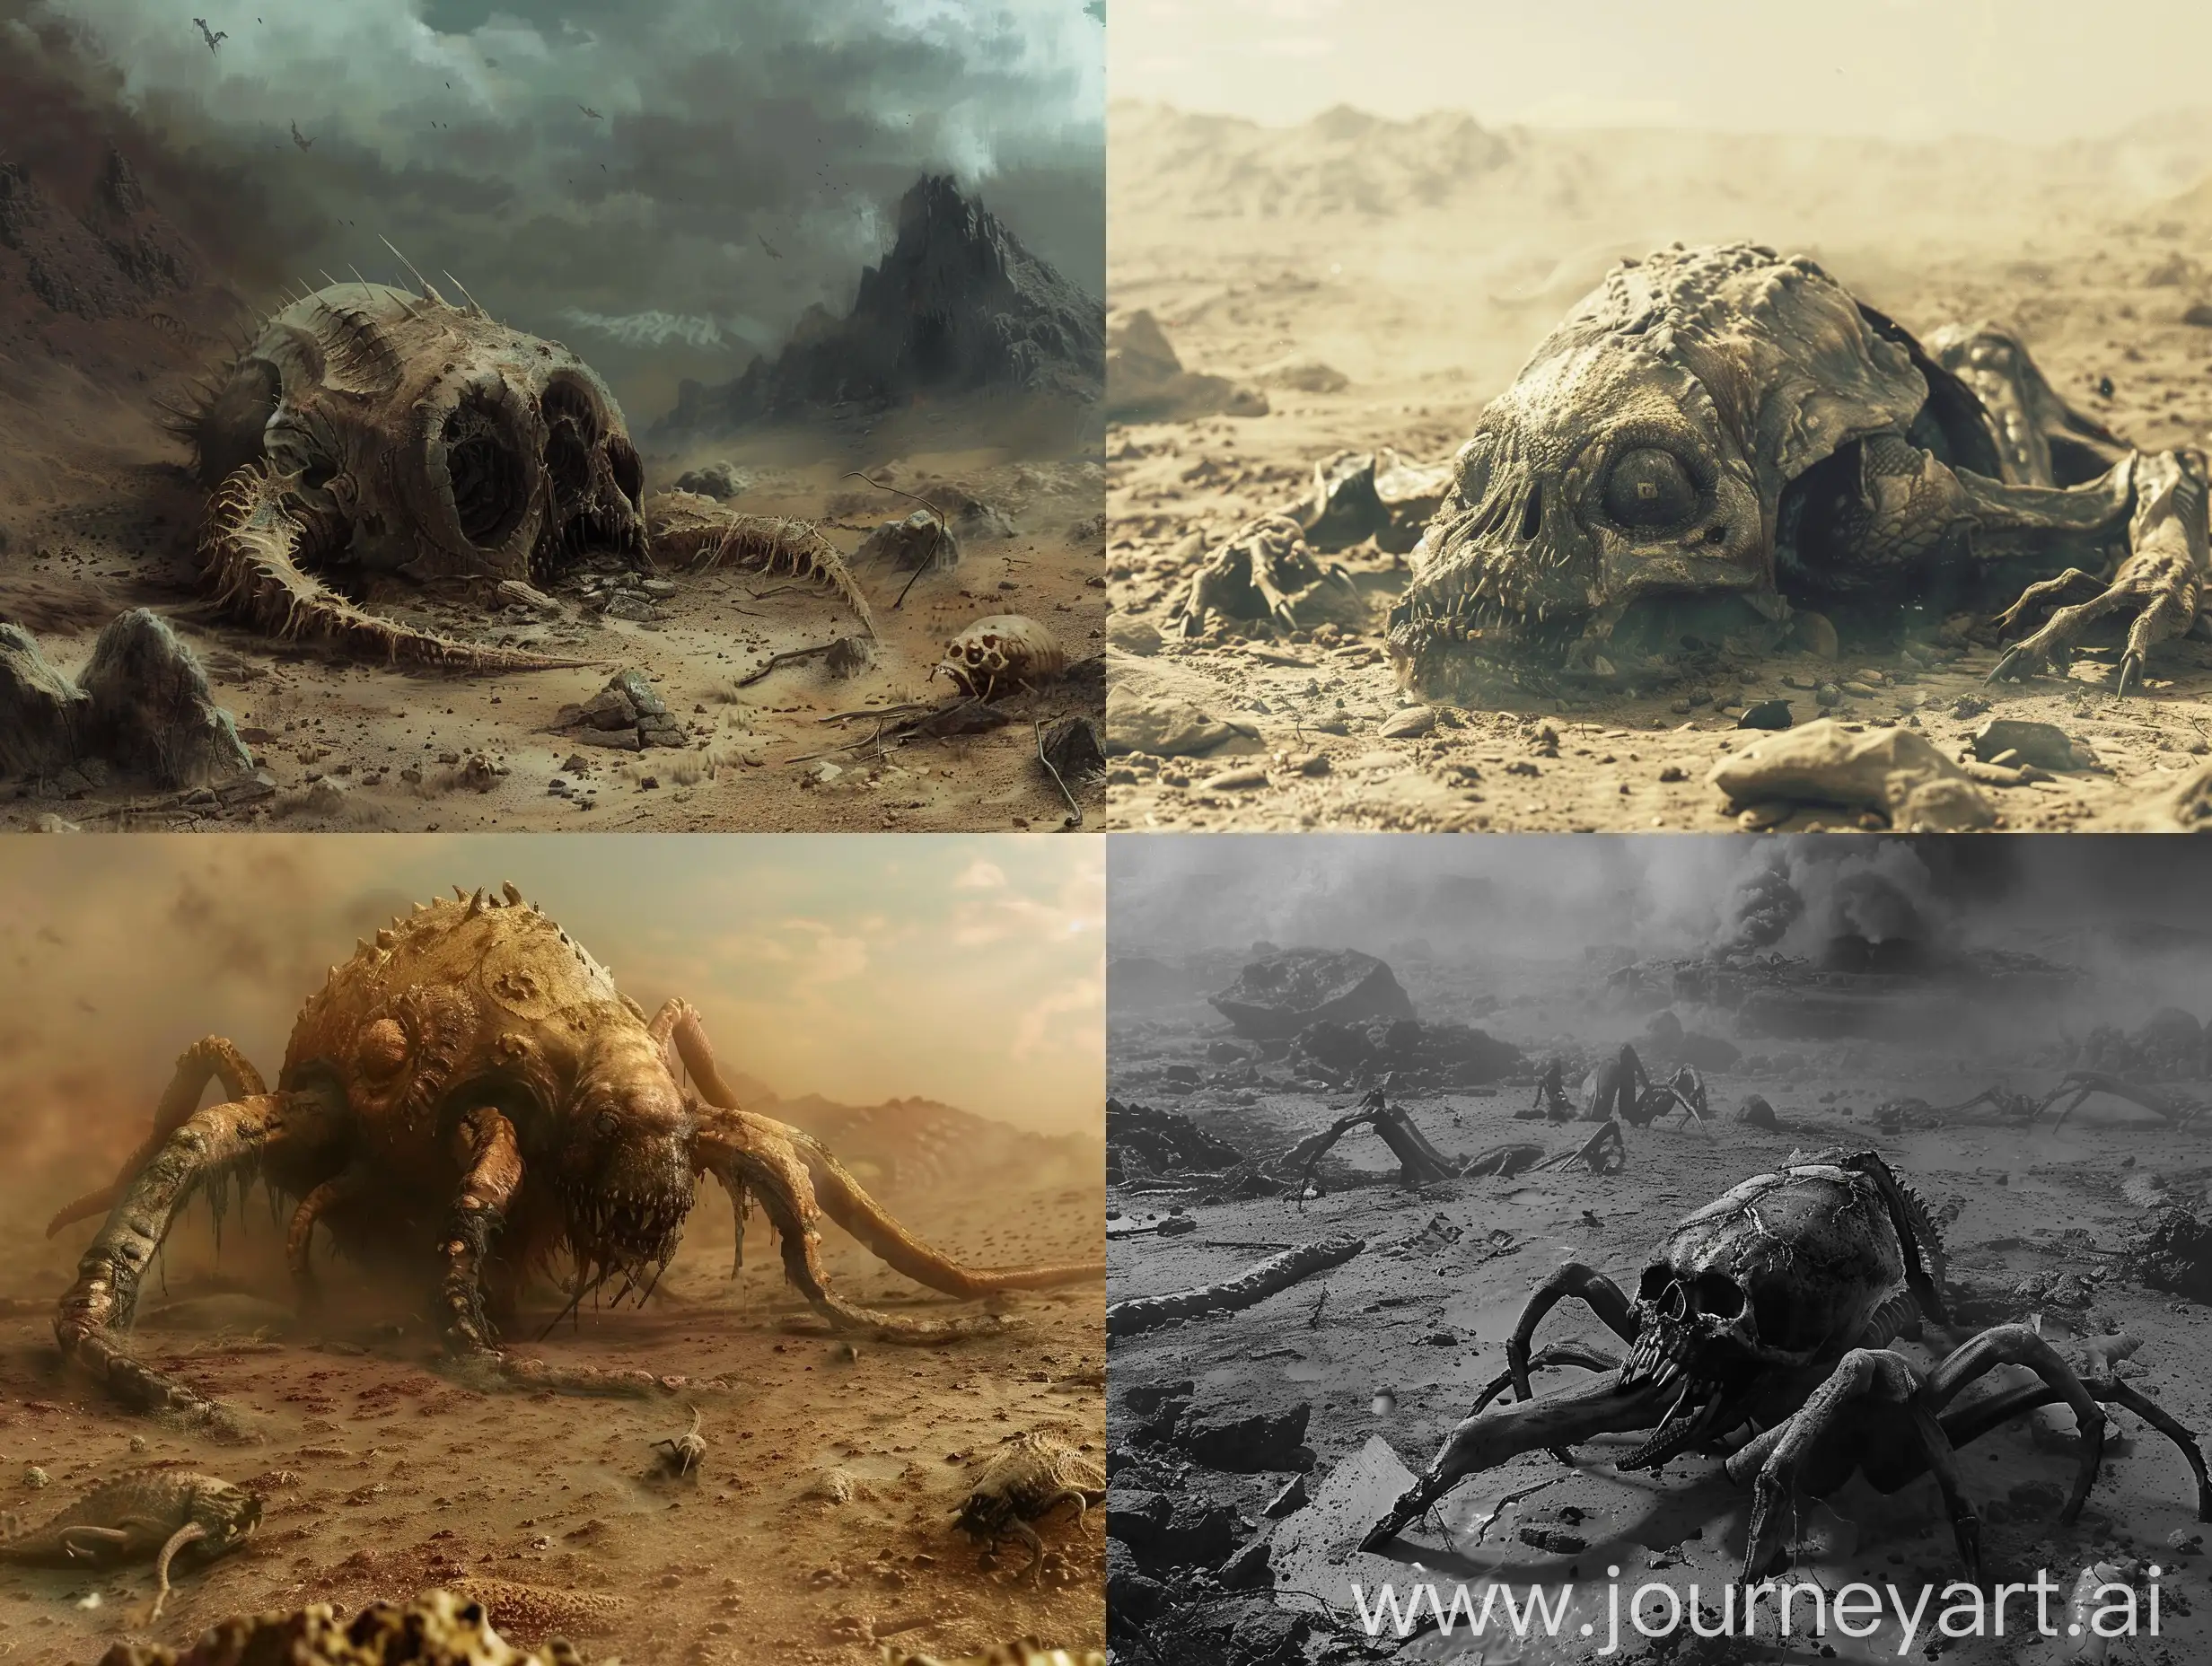 Lifeless-Creatures-Scattered-Across-Desolate-Landscape